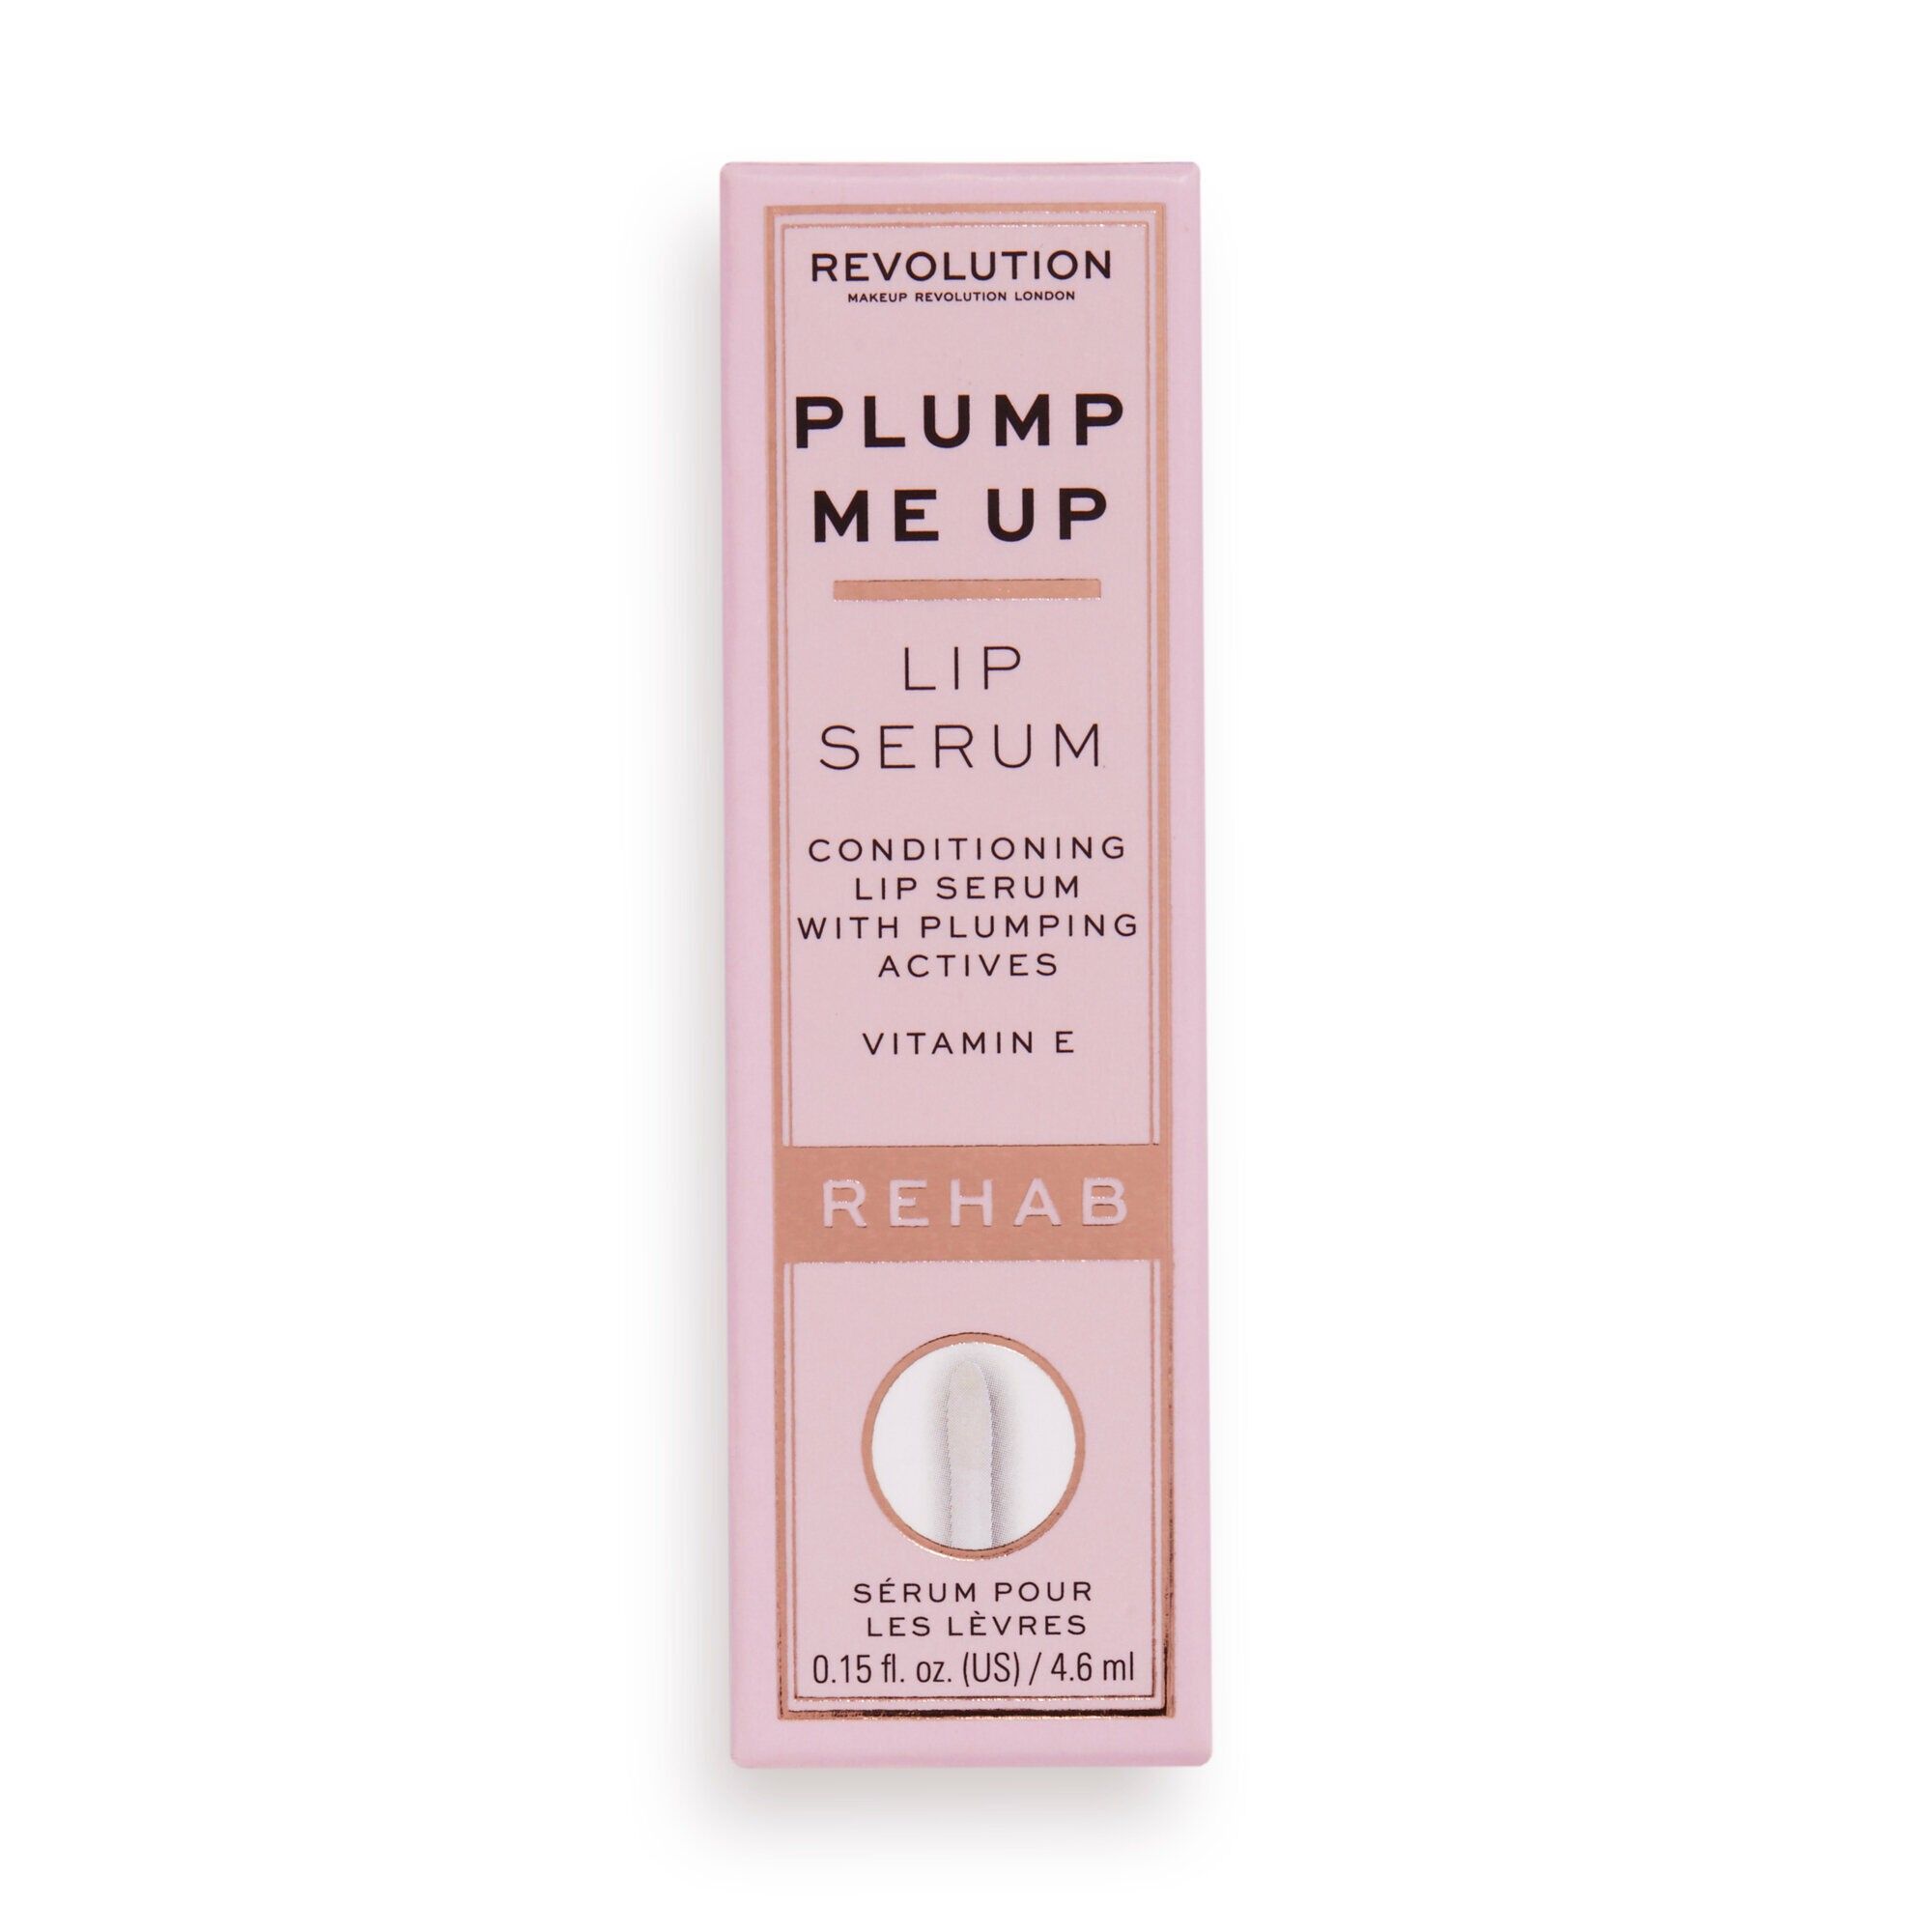 Lippenserum - Rehab Plump Me Up Lip Serum